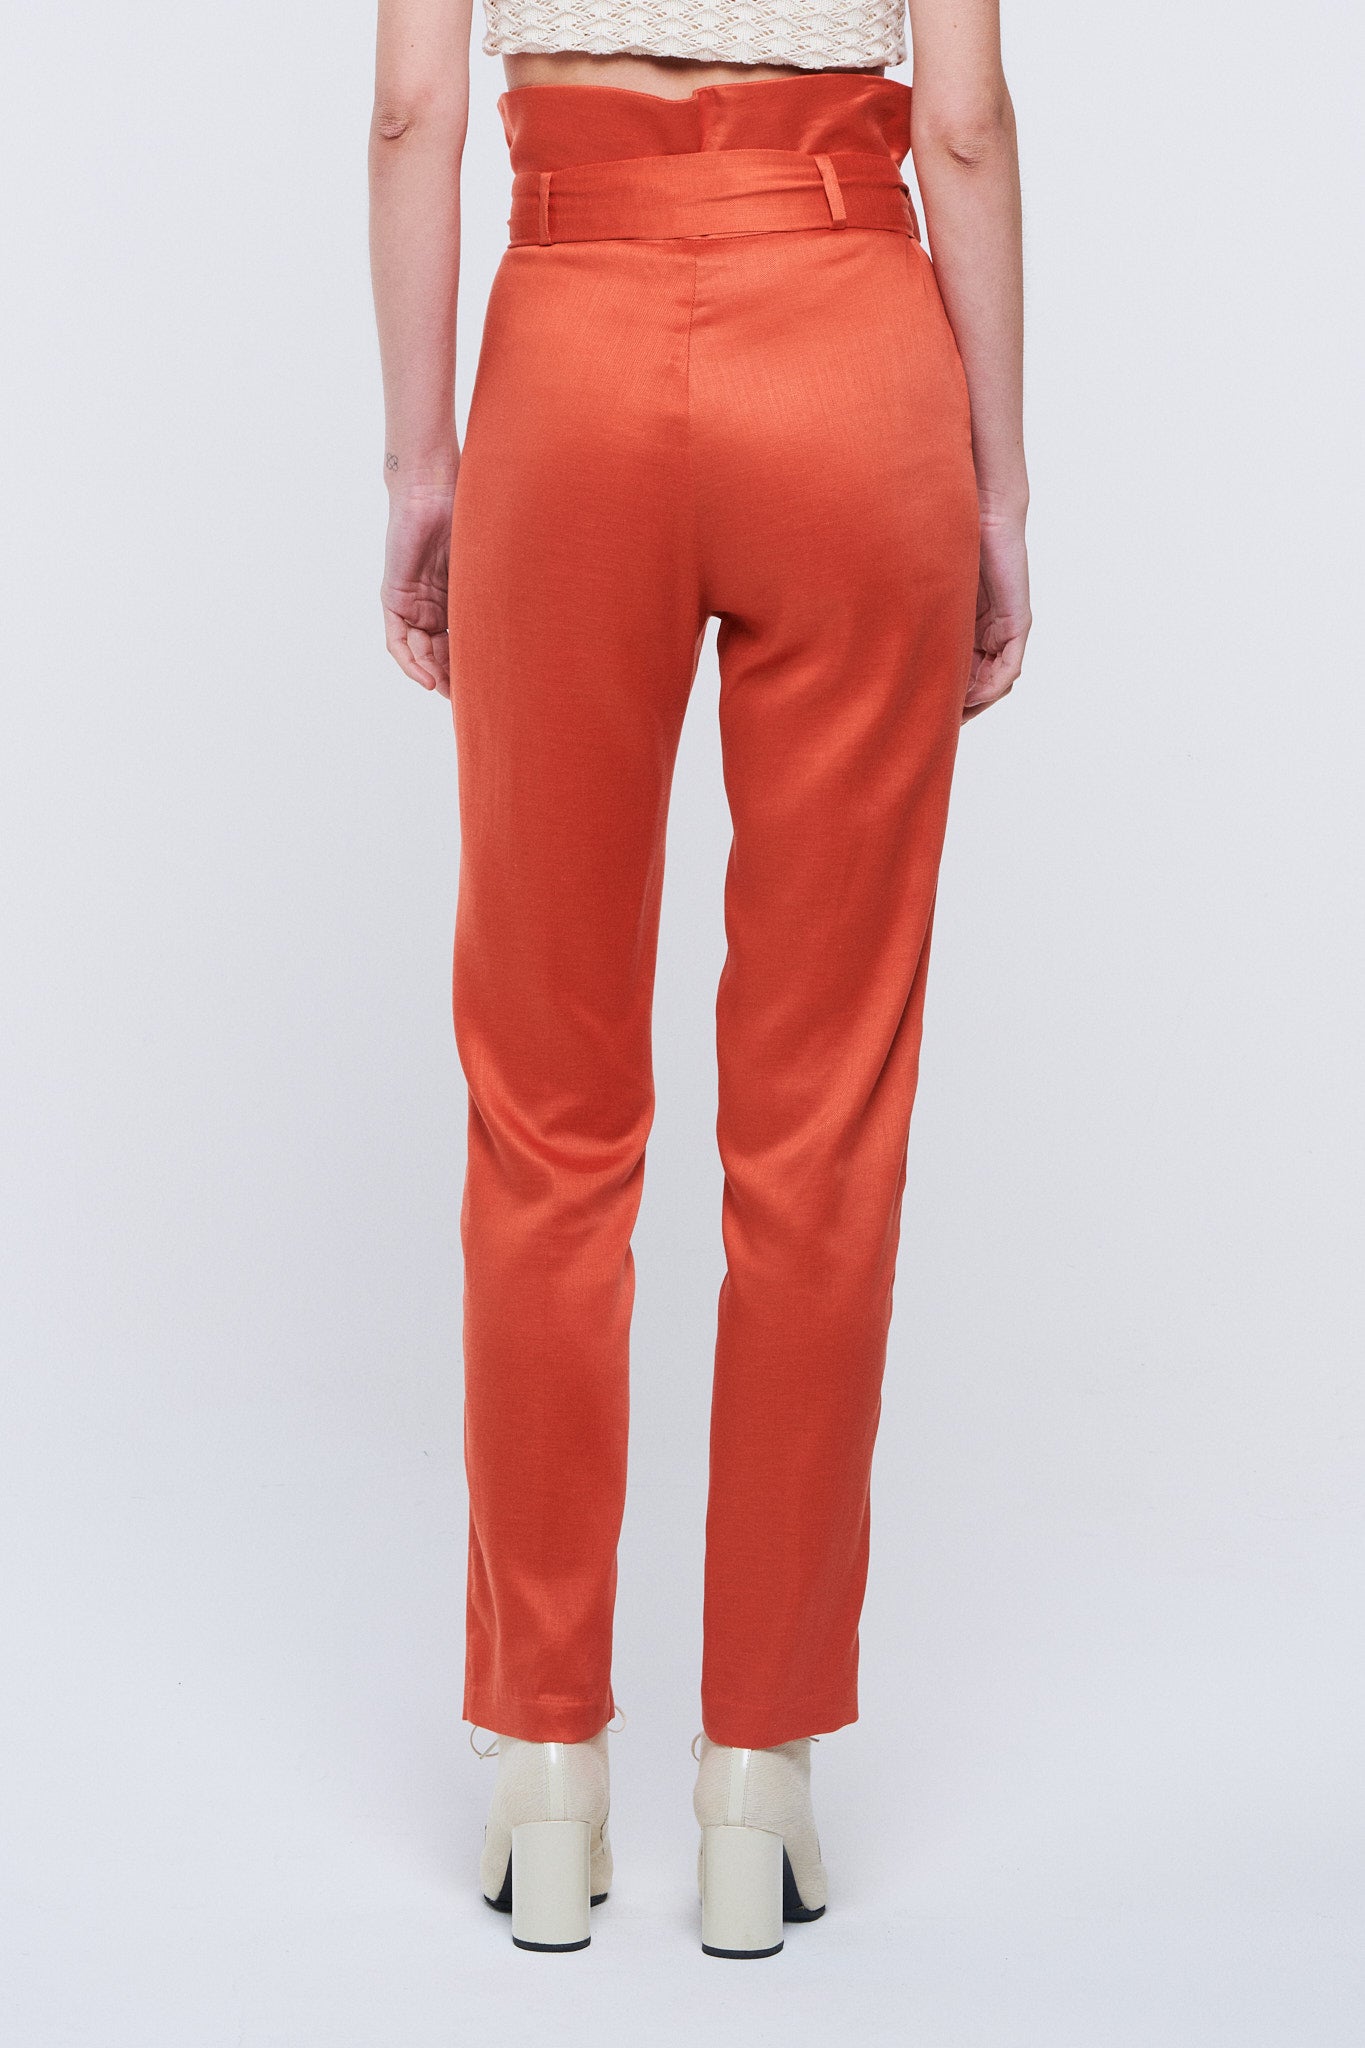 Pantalon avec noeud orange